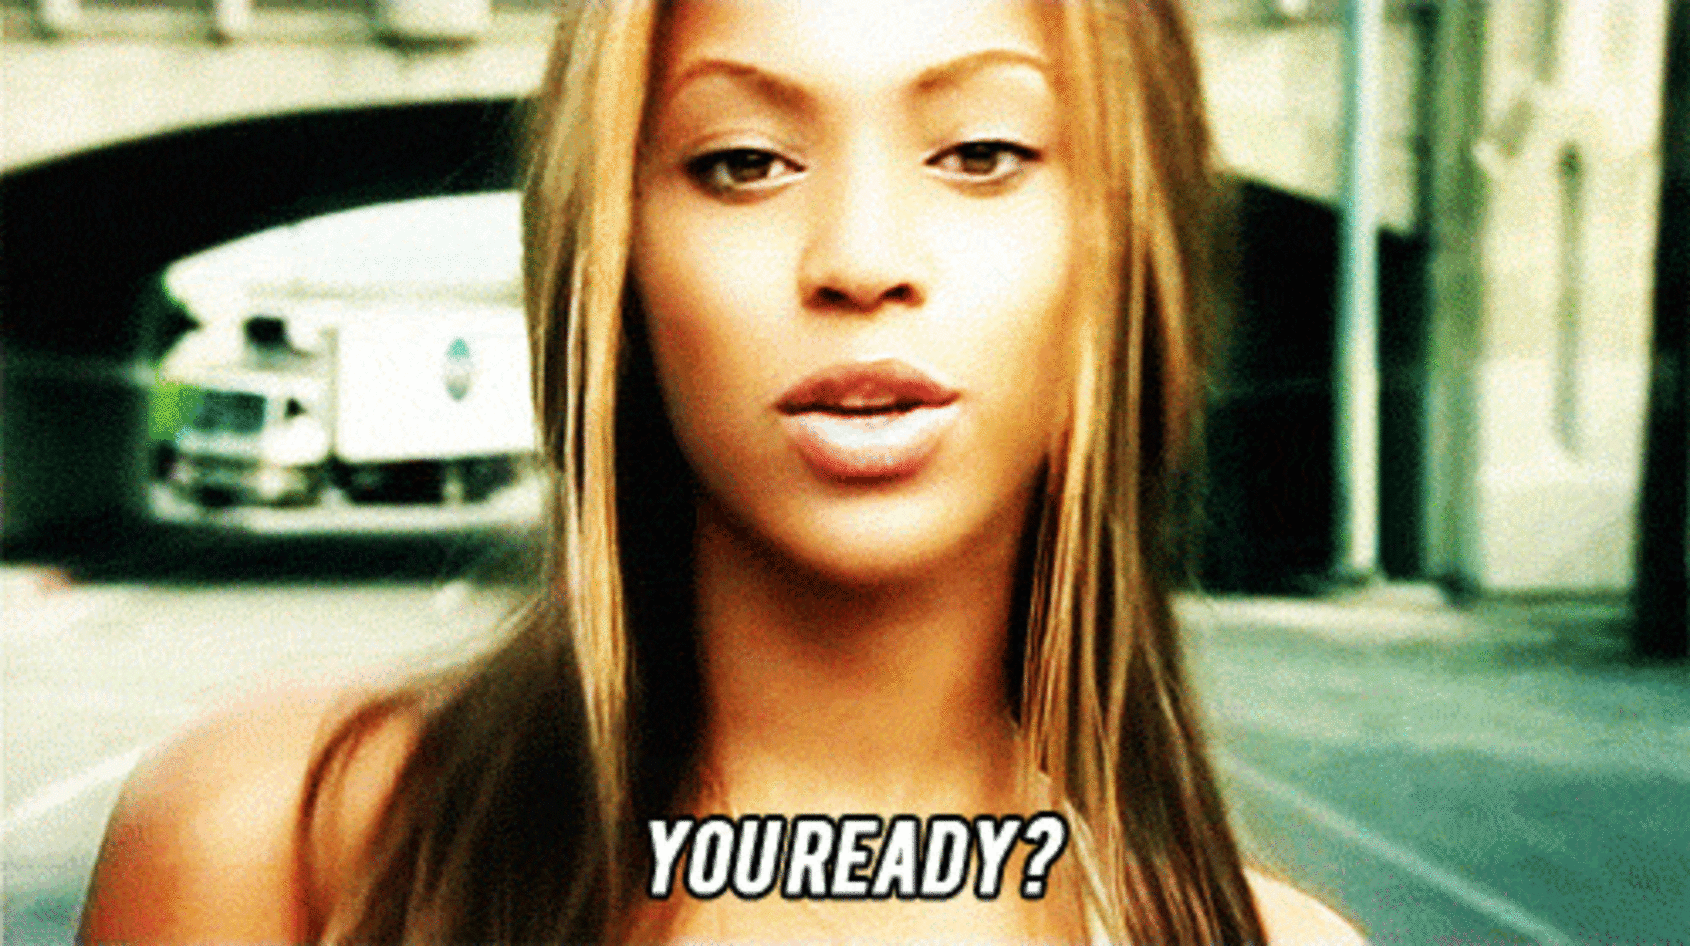 Beyonce saying "You ready?" | Career Resolutions